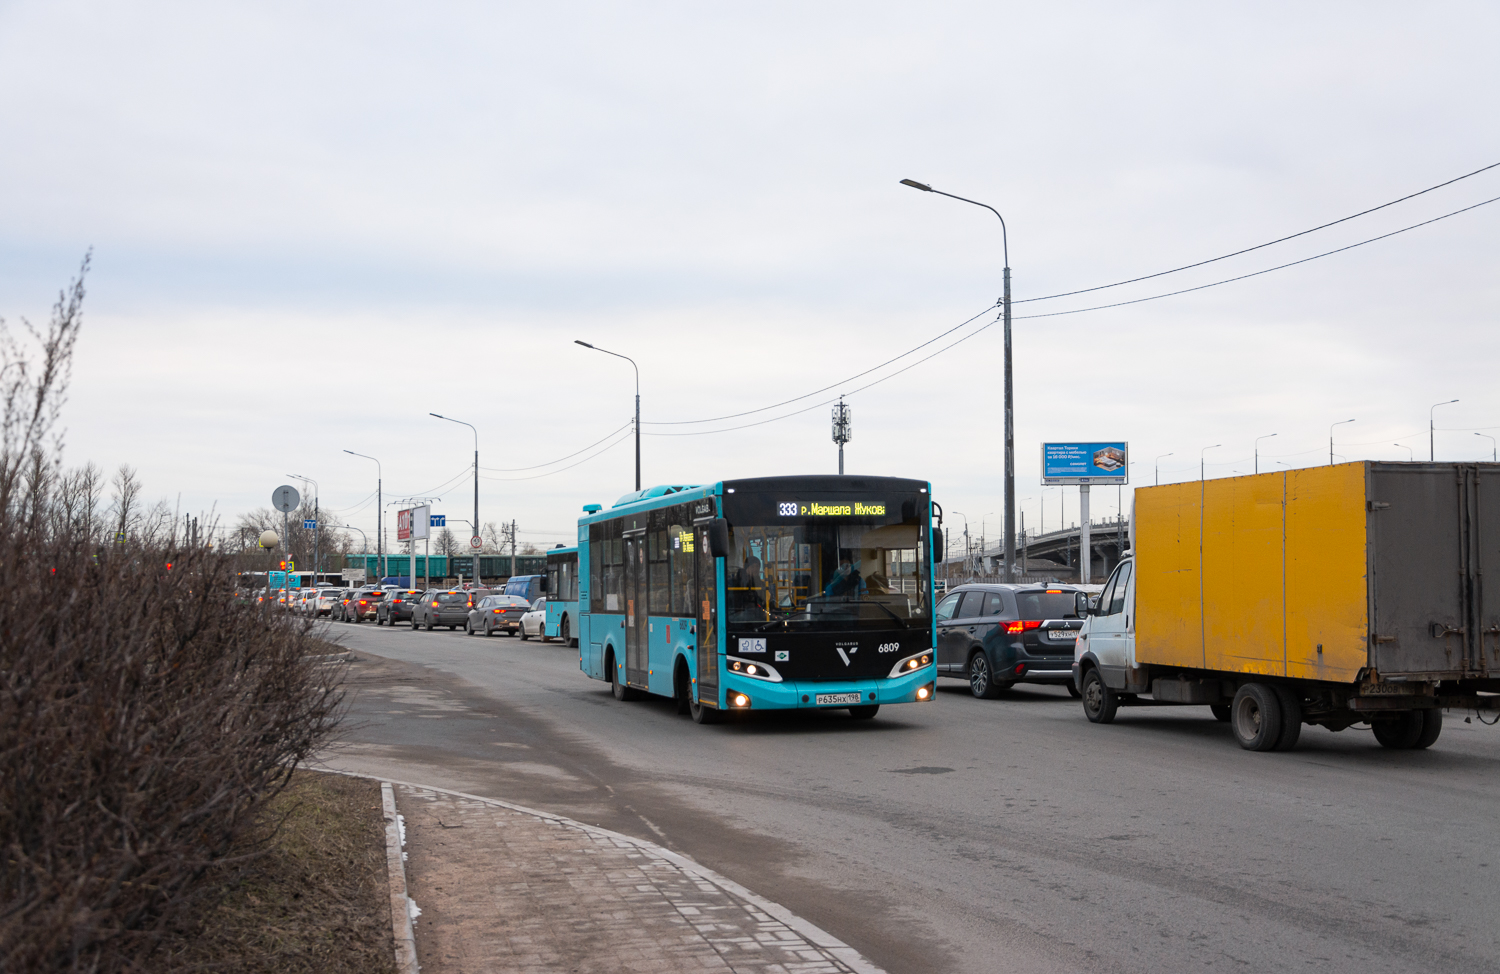 Saint Petersburg, Volgabus-4298.G4 (LNG) # 6809